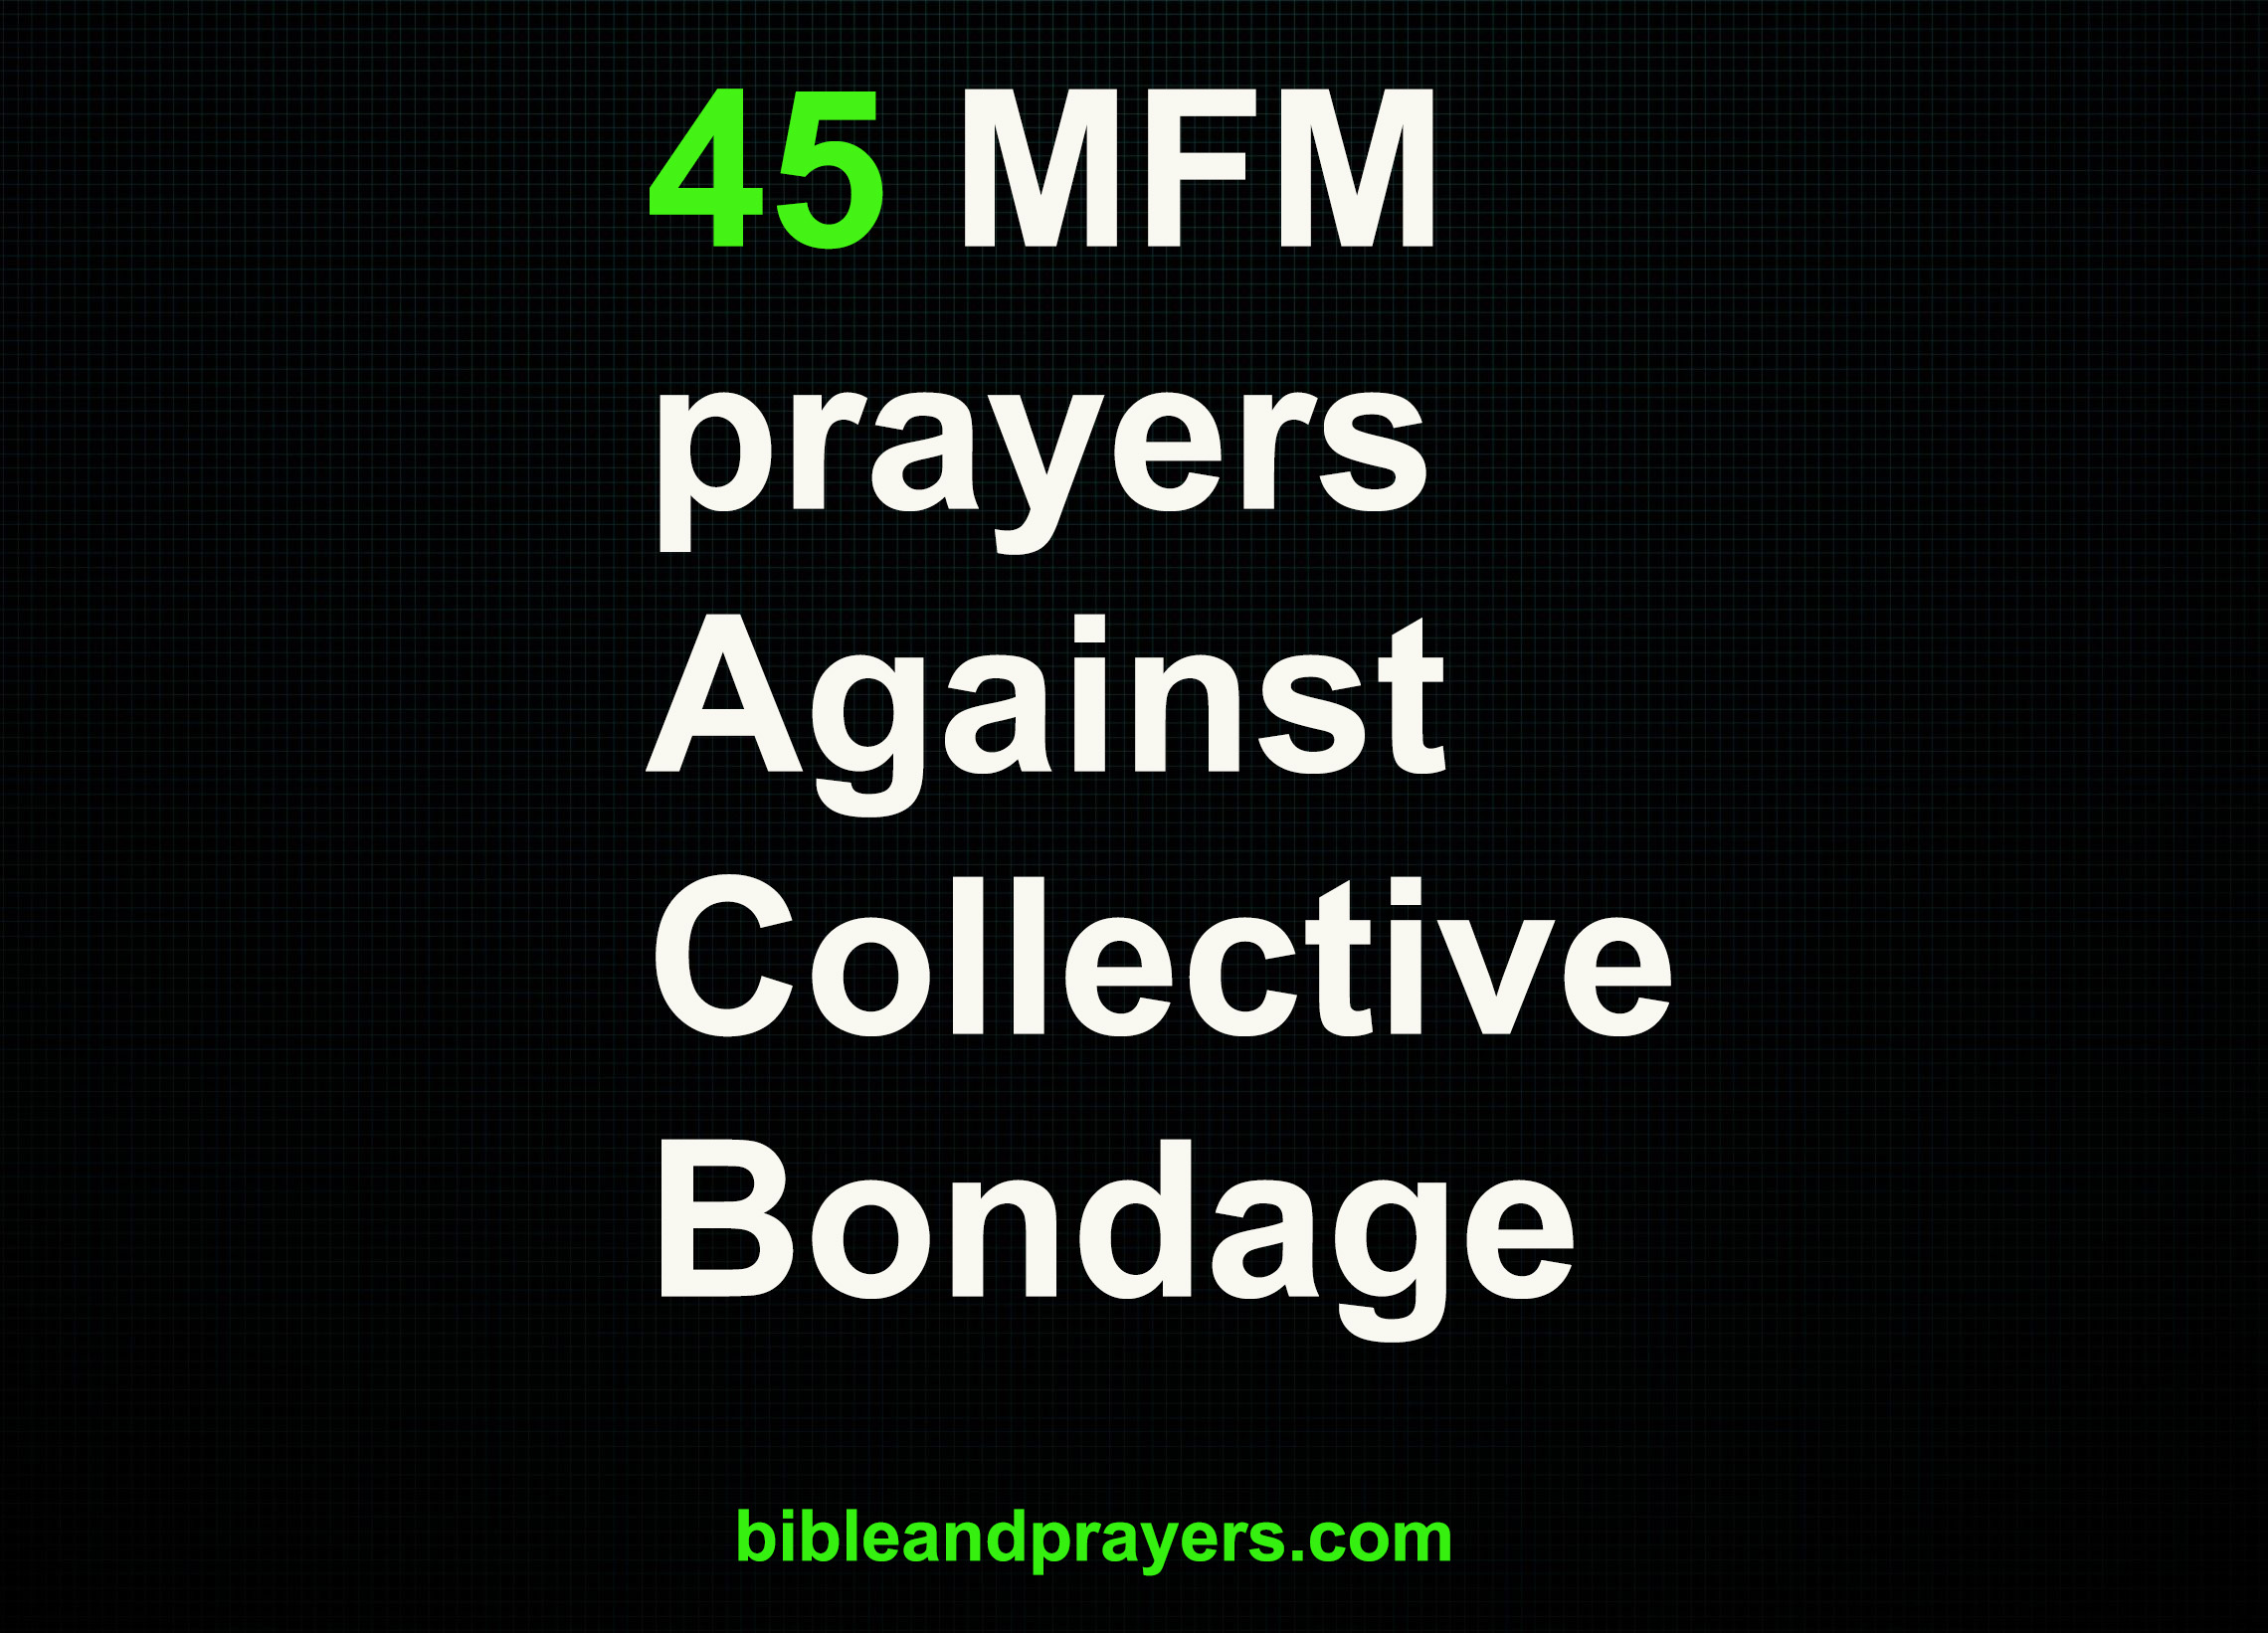 45 MFM prayers Against Collective Bondage